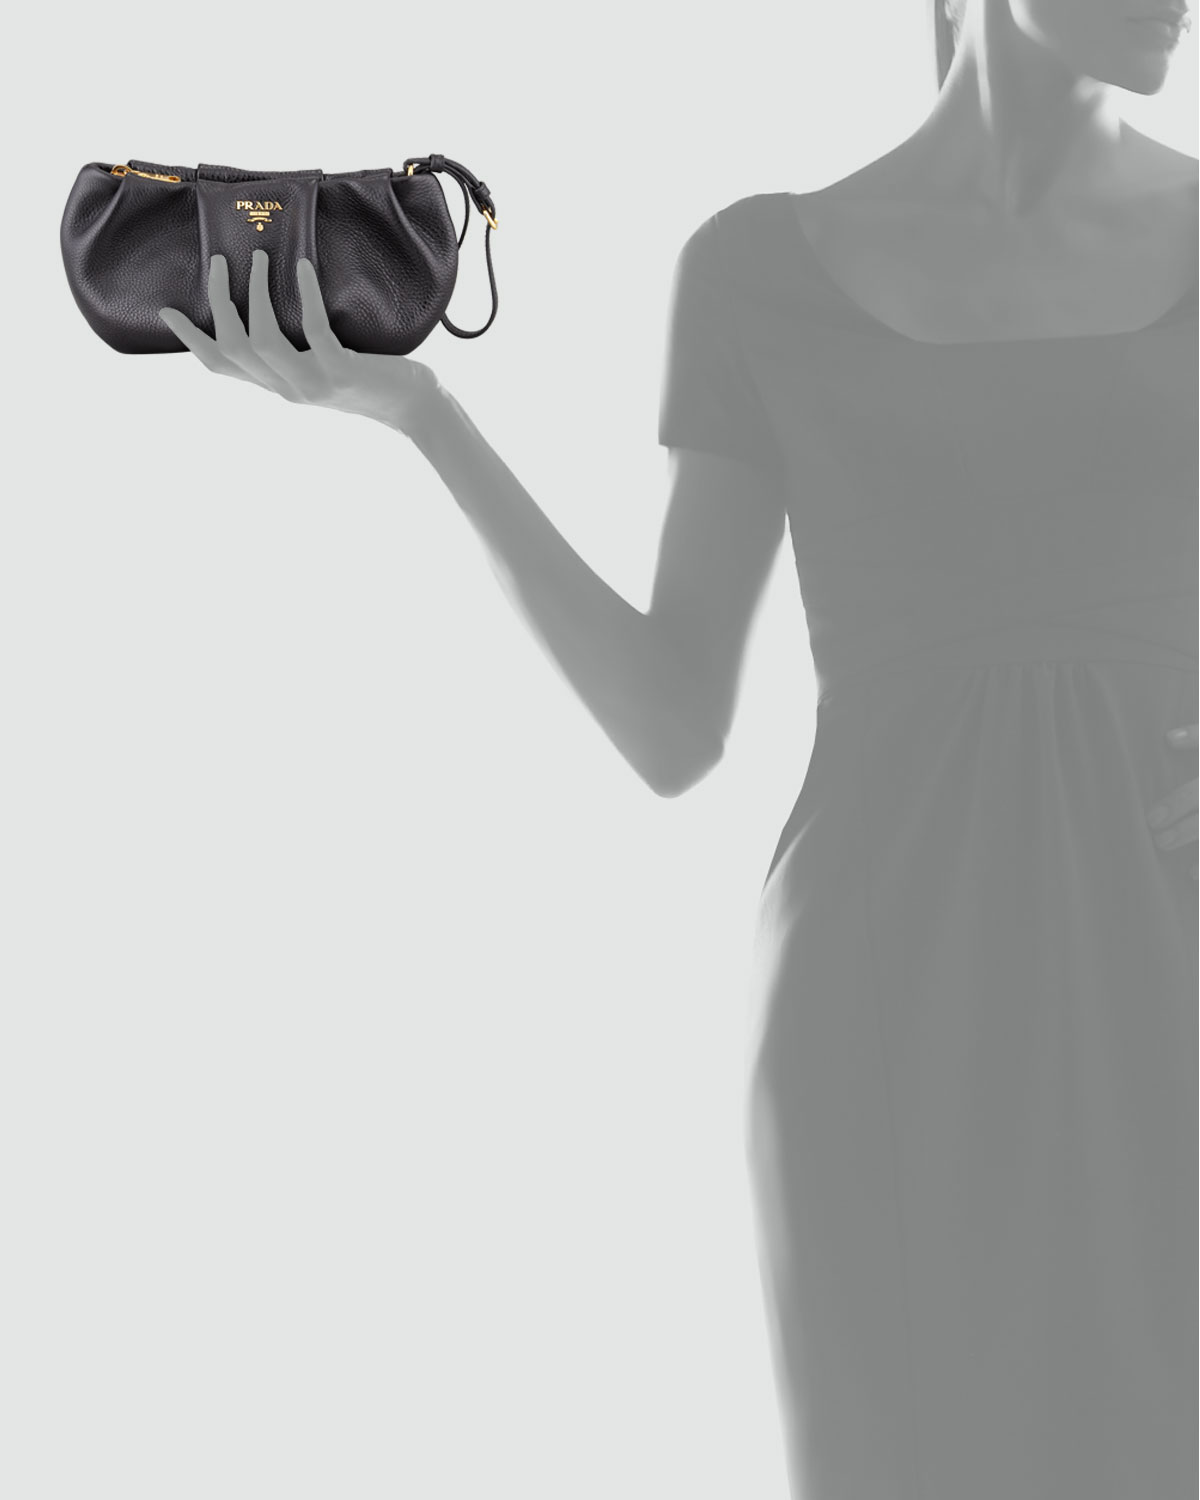 Prada Daino Pleated Wristlet Clutch Bag in Black | Lyst  